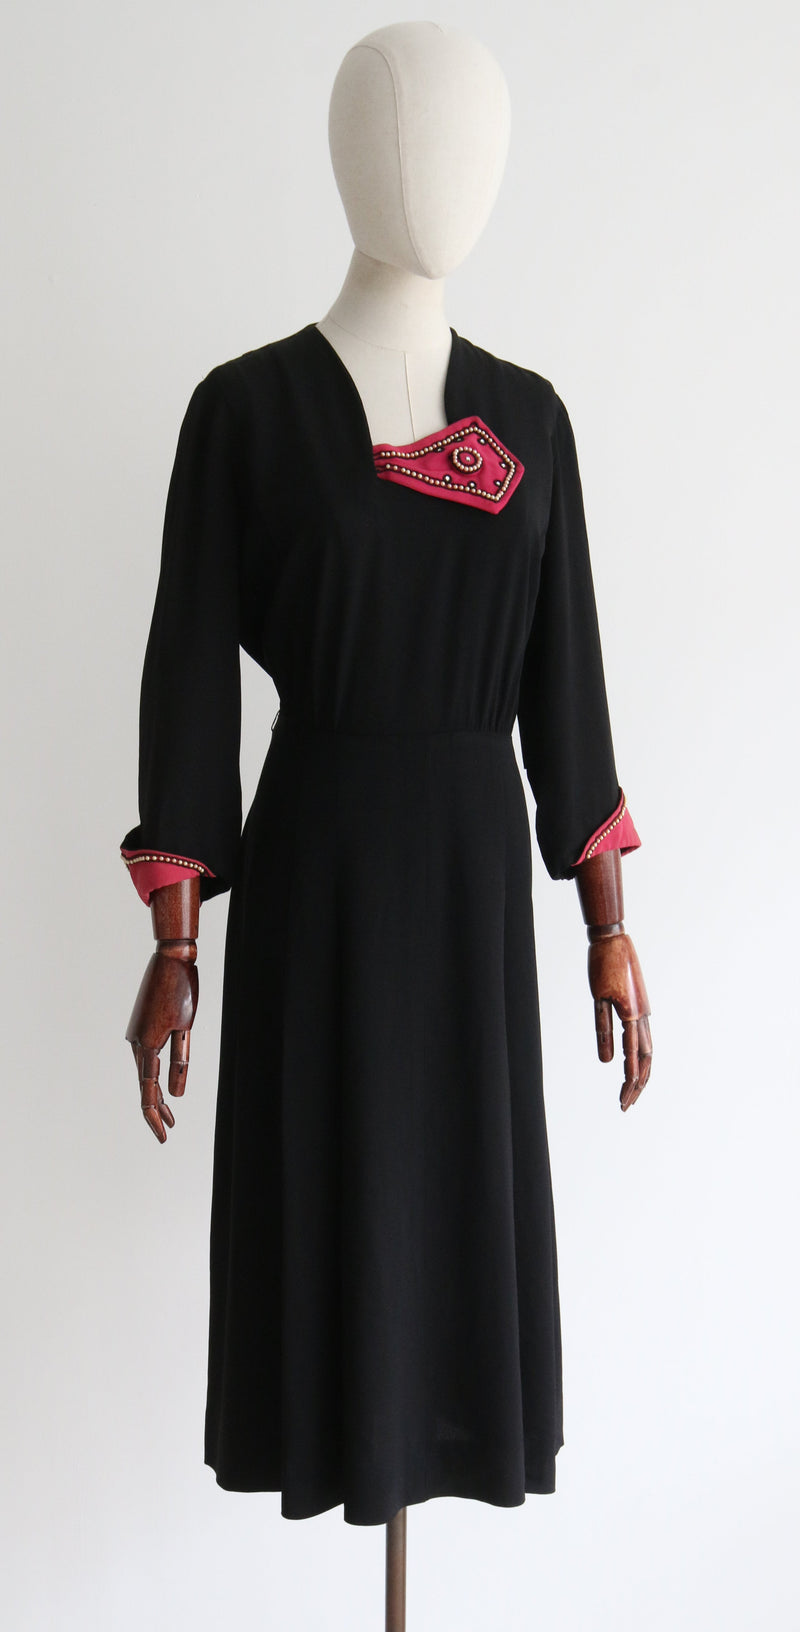 "Fuchsia & Pearls" Vintage 1940's Black & Fuchsia Rayon Embellished Dress UK 14 US 10